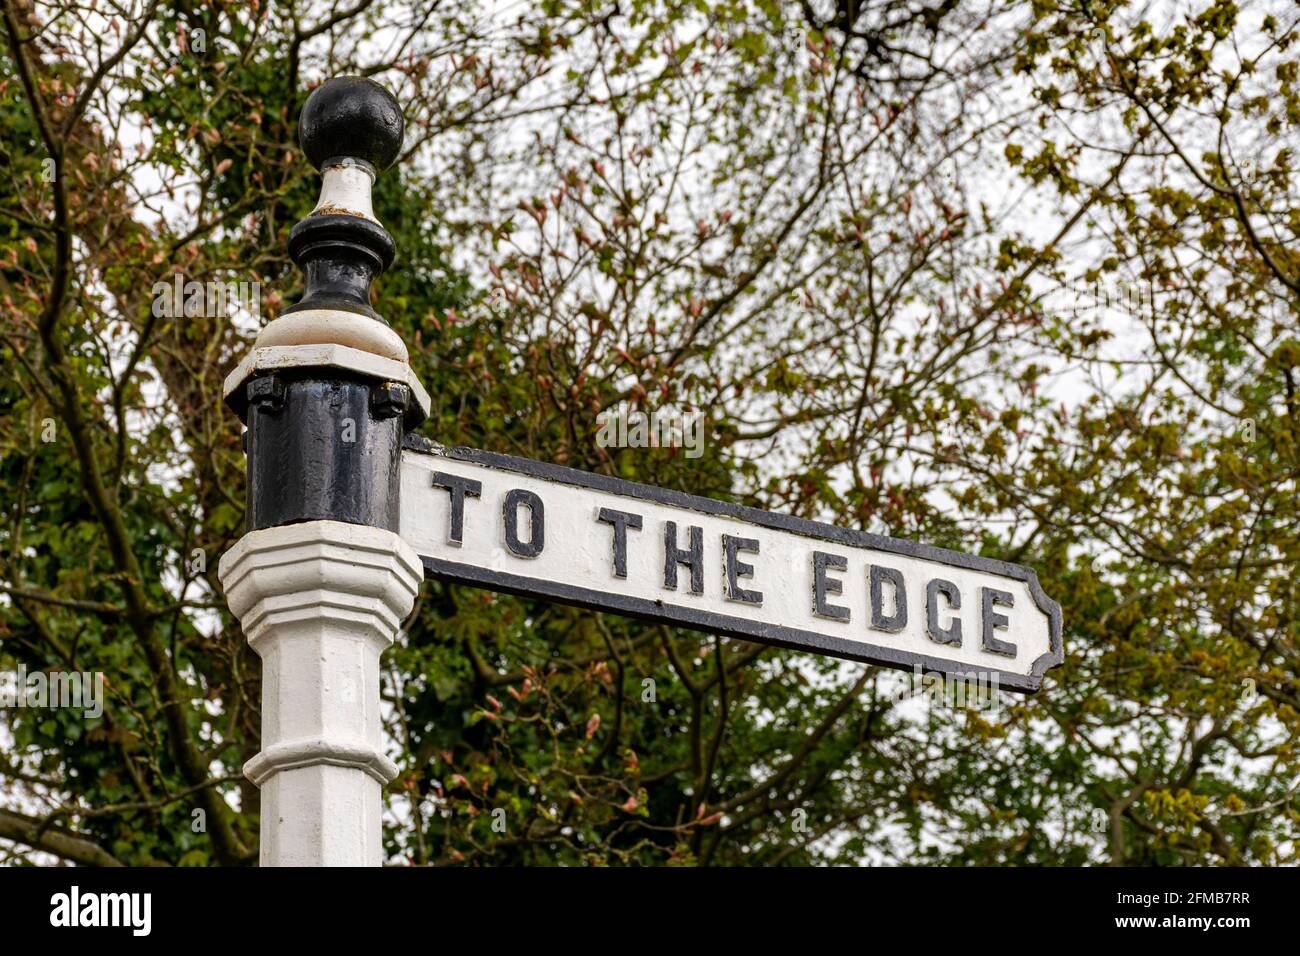 To The Edge sign at Alderley Edge, Cheshire, England, UK. Stock Photo